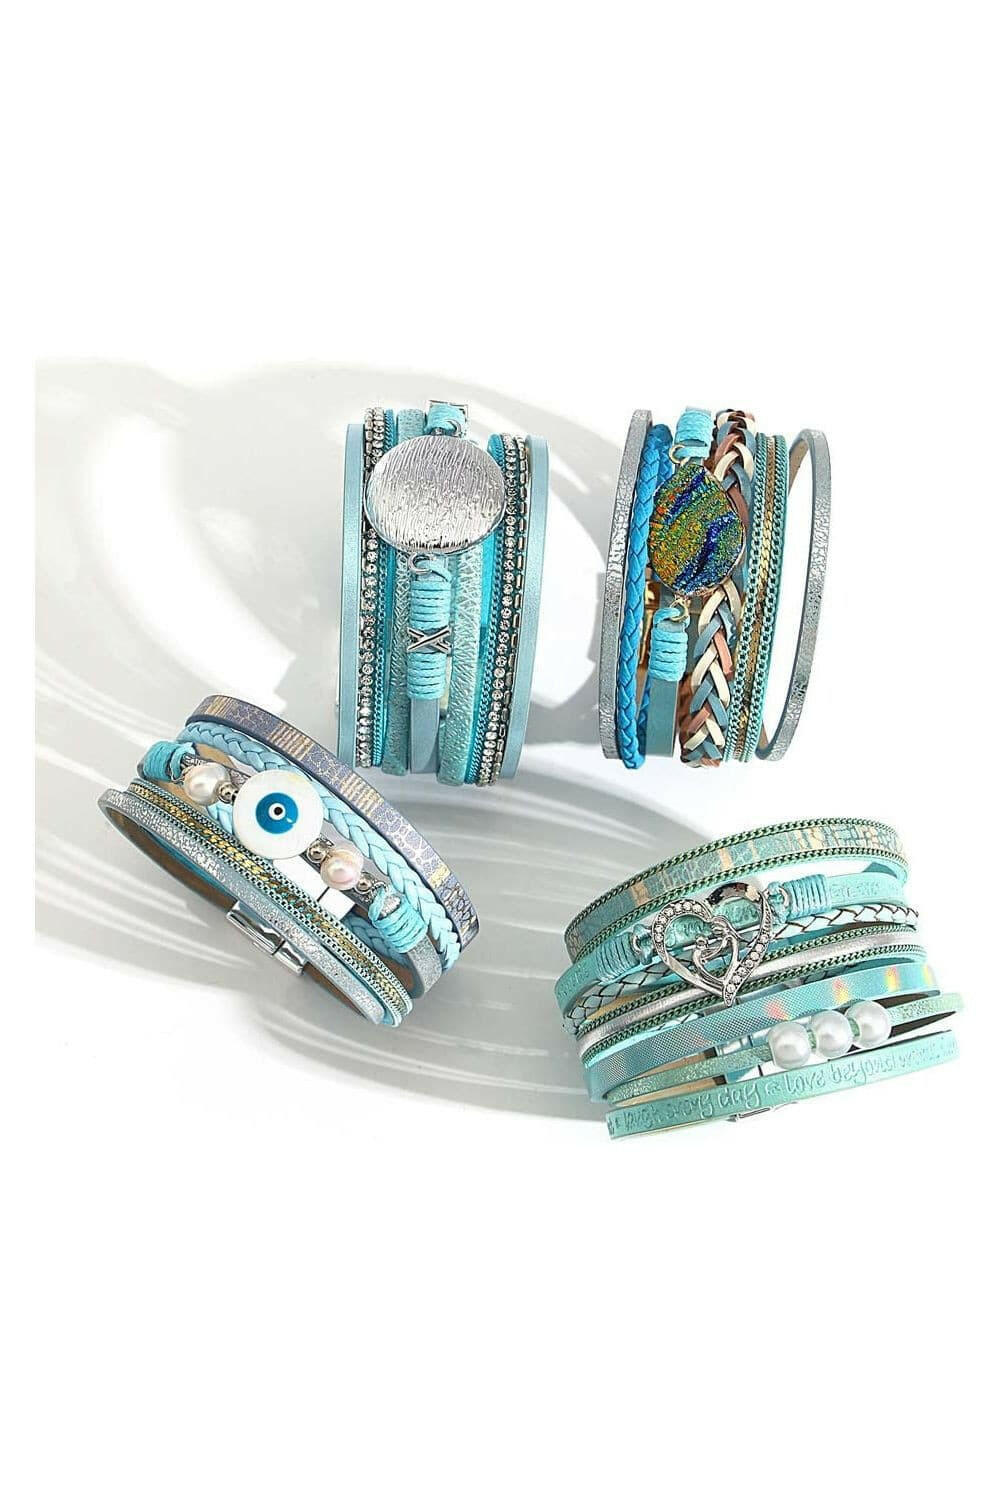 Boho Blue Multilayer Braided Leather Bracelet for Women - Charm Heart Cross Evil Eye Pearl Wrap Bracelets.